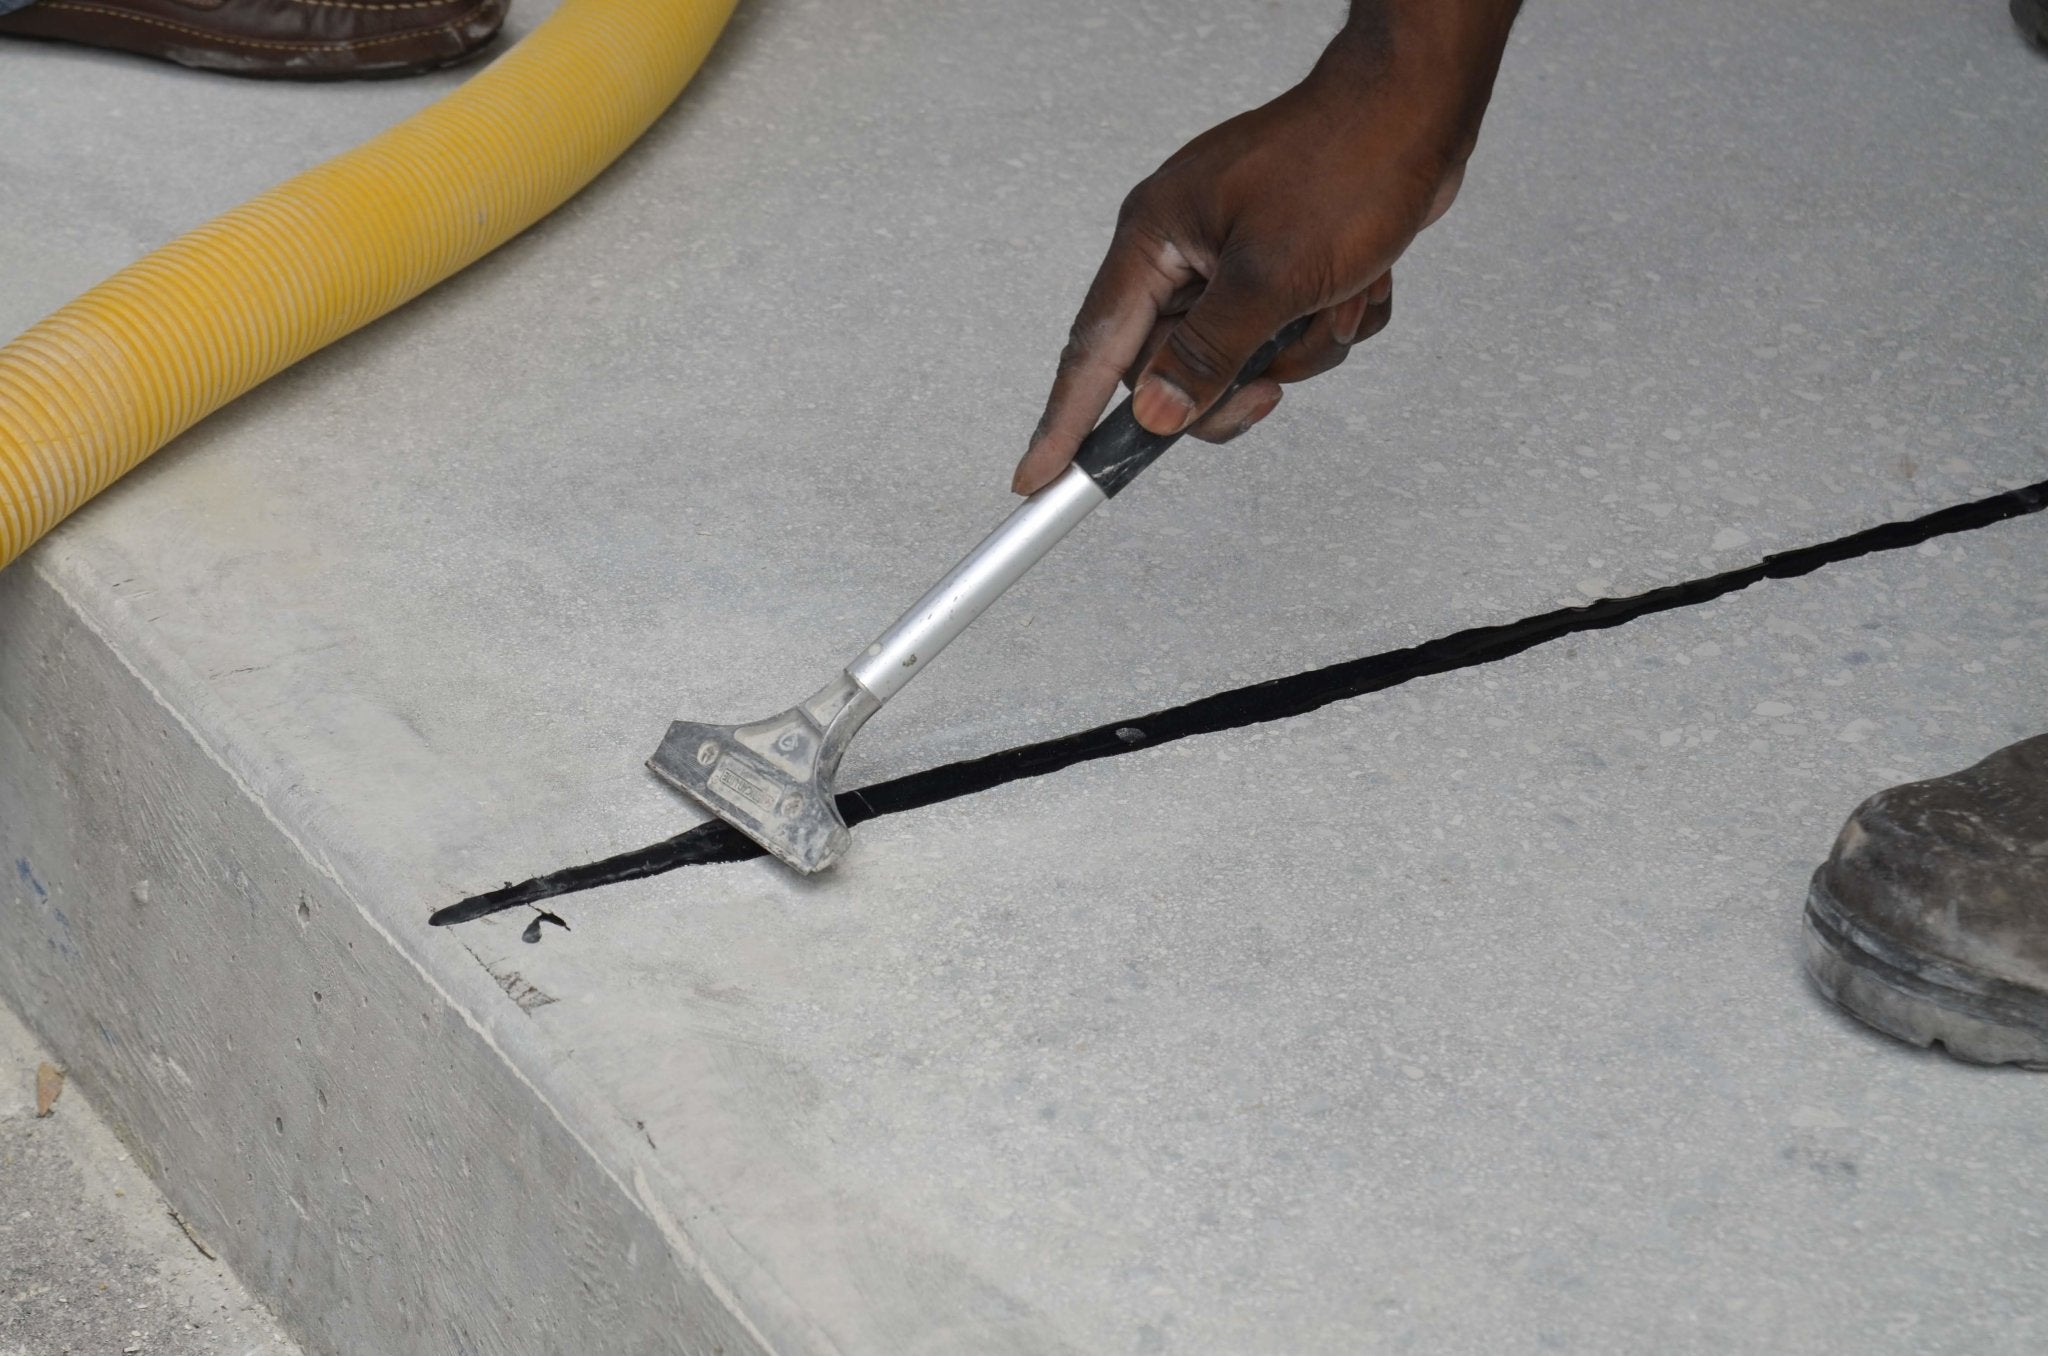 Concrete Crack and Joint Repair - DCI Flooring